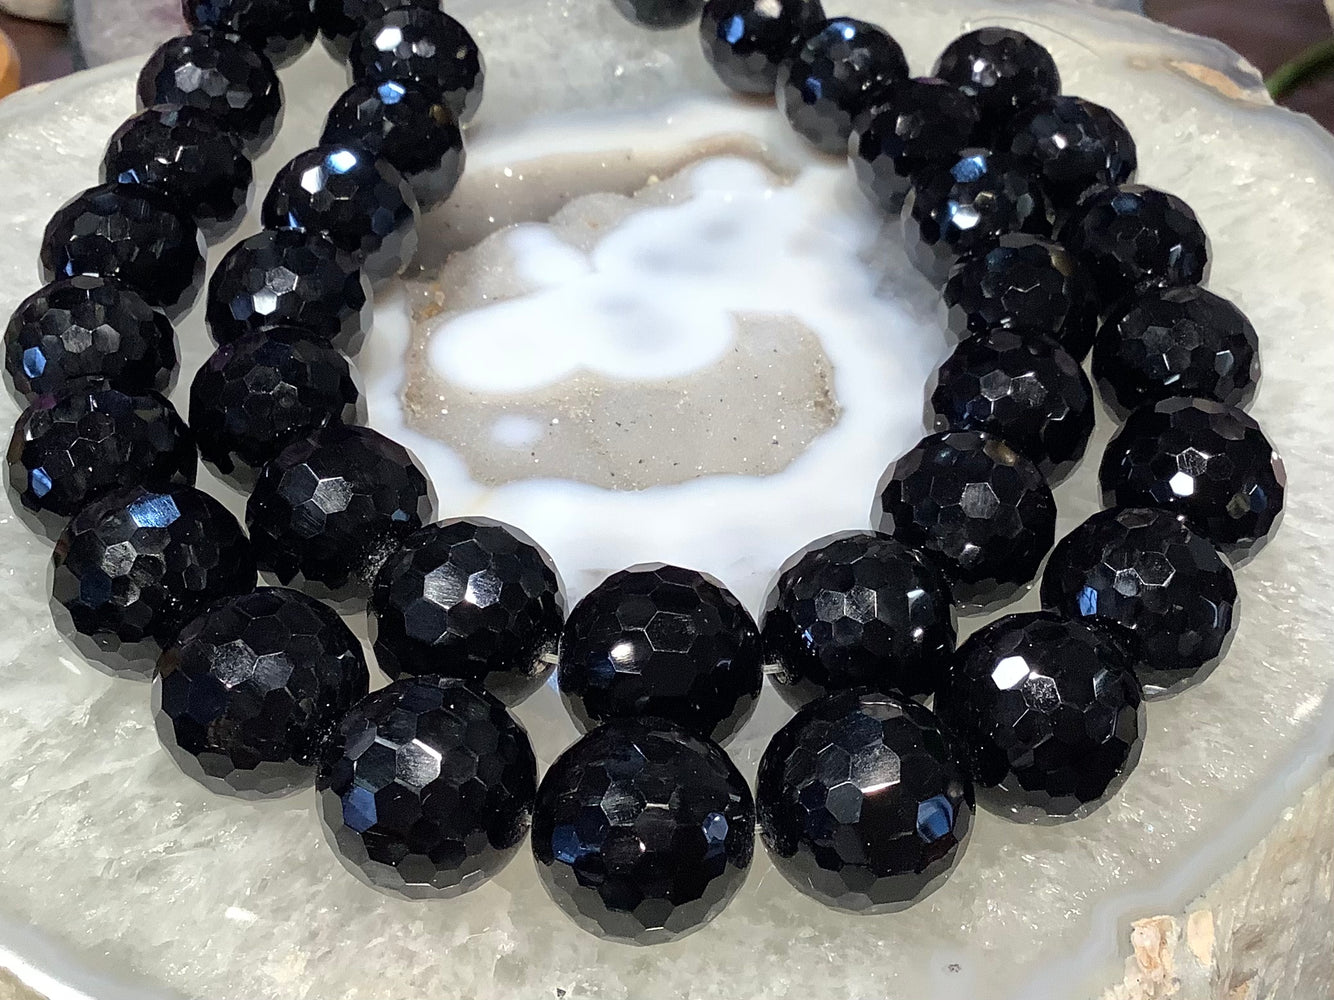 Black agate 22mm faceted gemstones